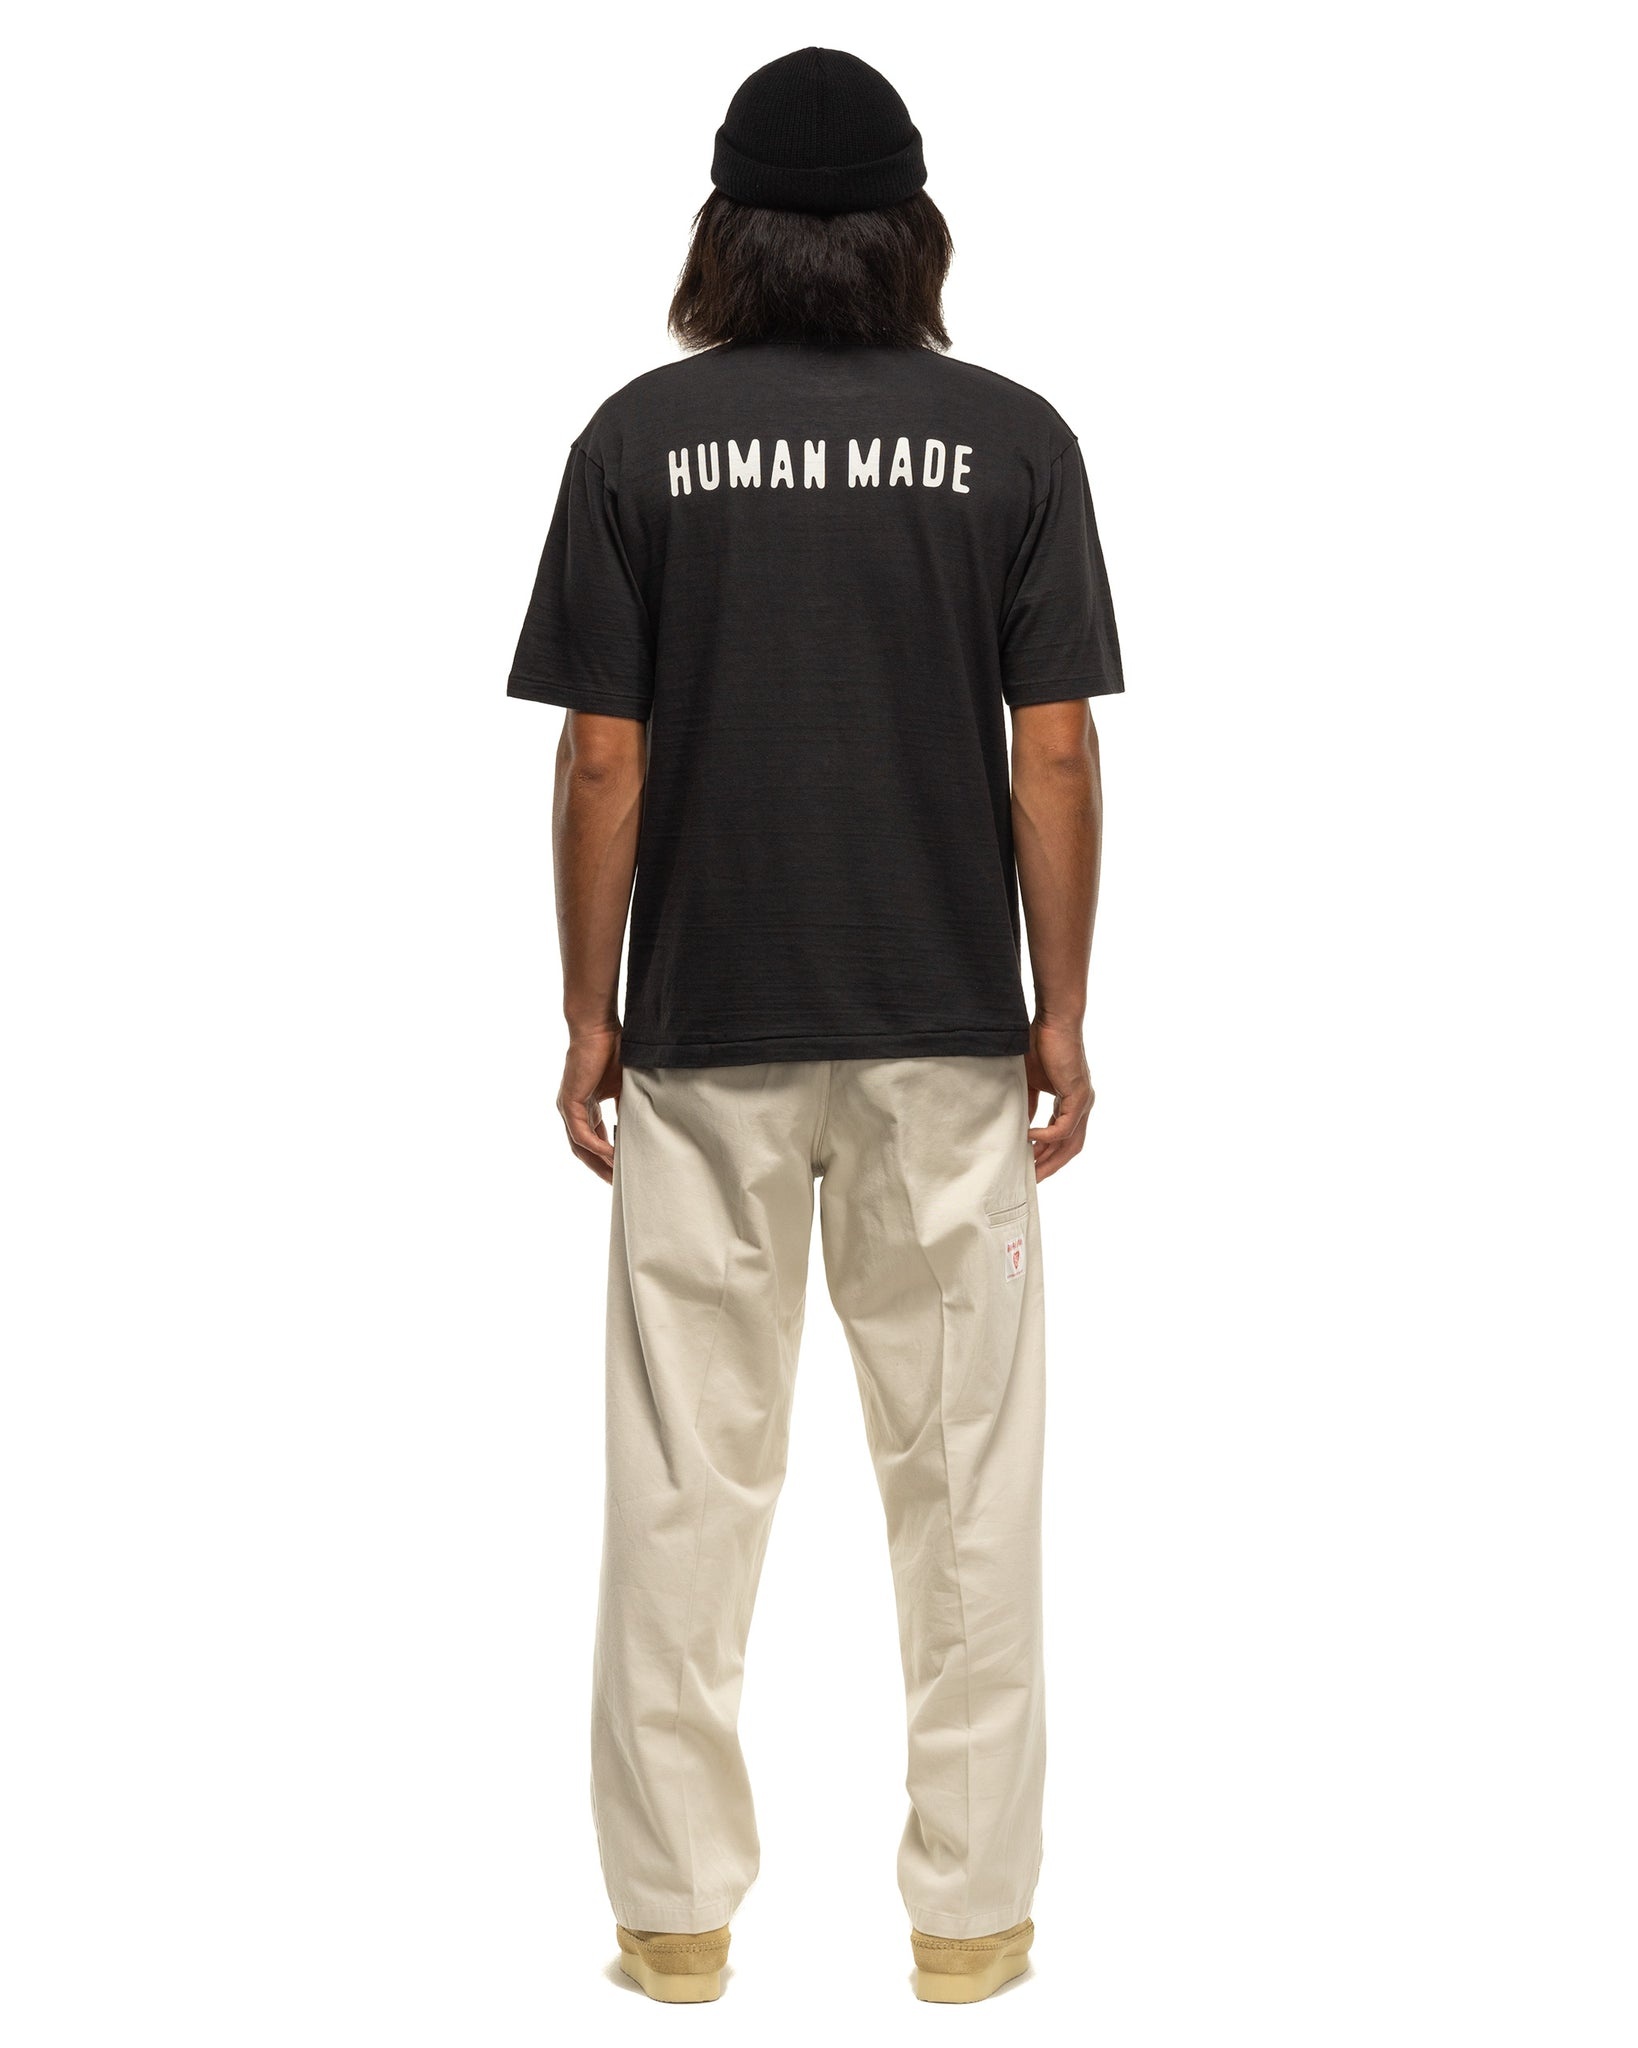 Human Made Graphic T-Shirt #1 Black | REVERSIBLE